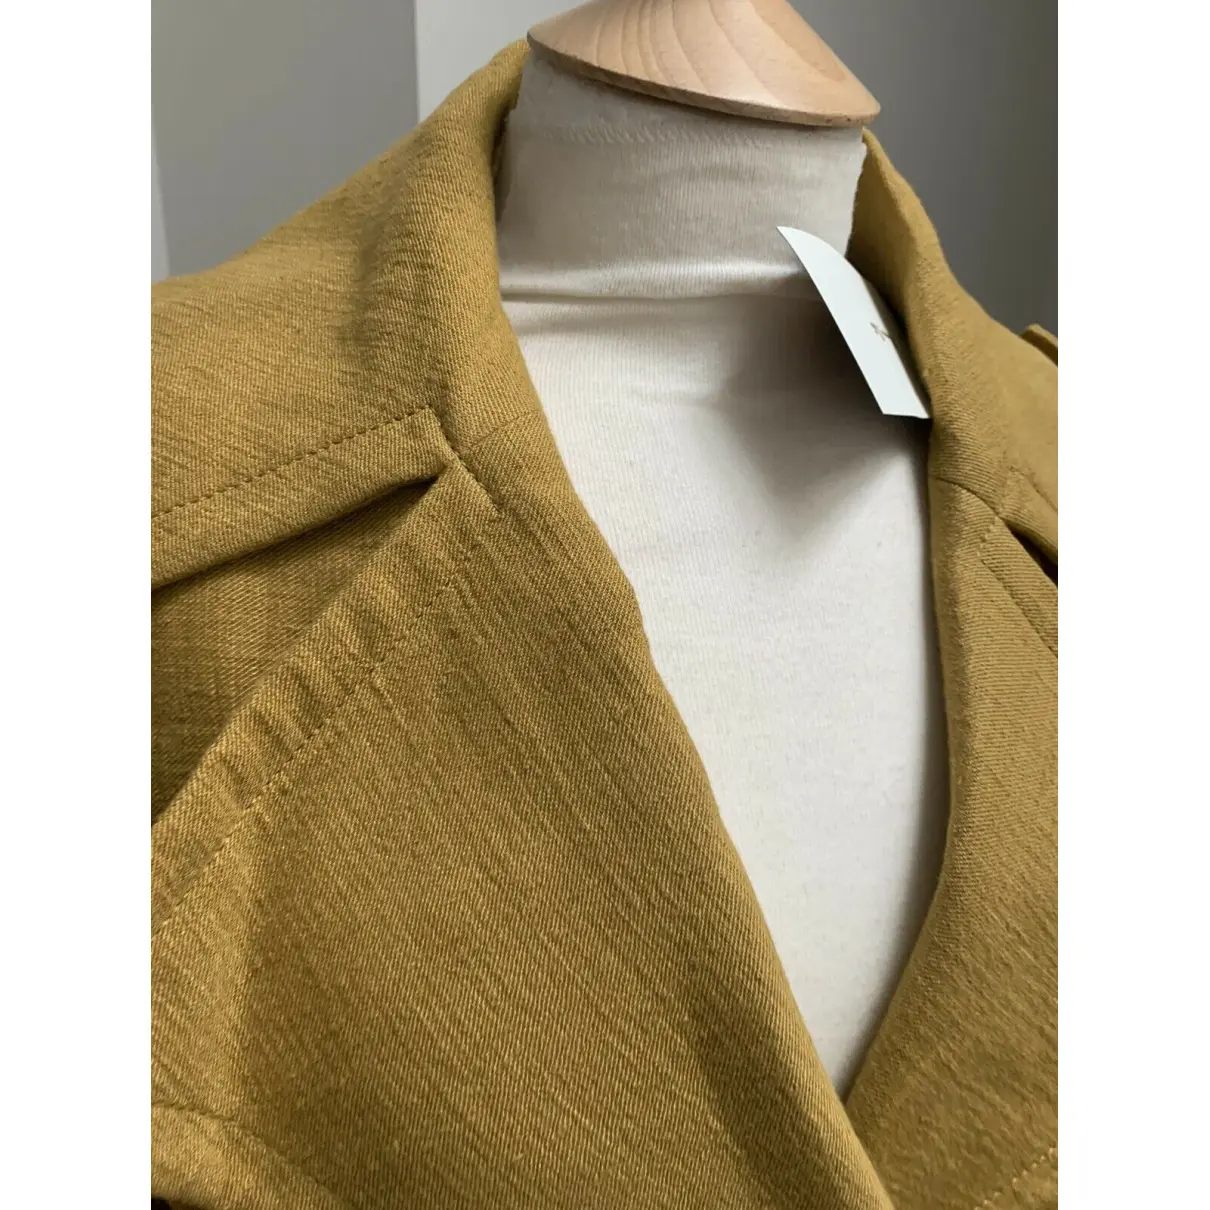 Linen coat Massimo Dutti